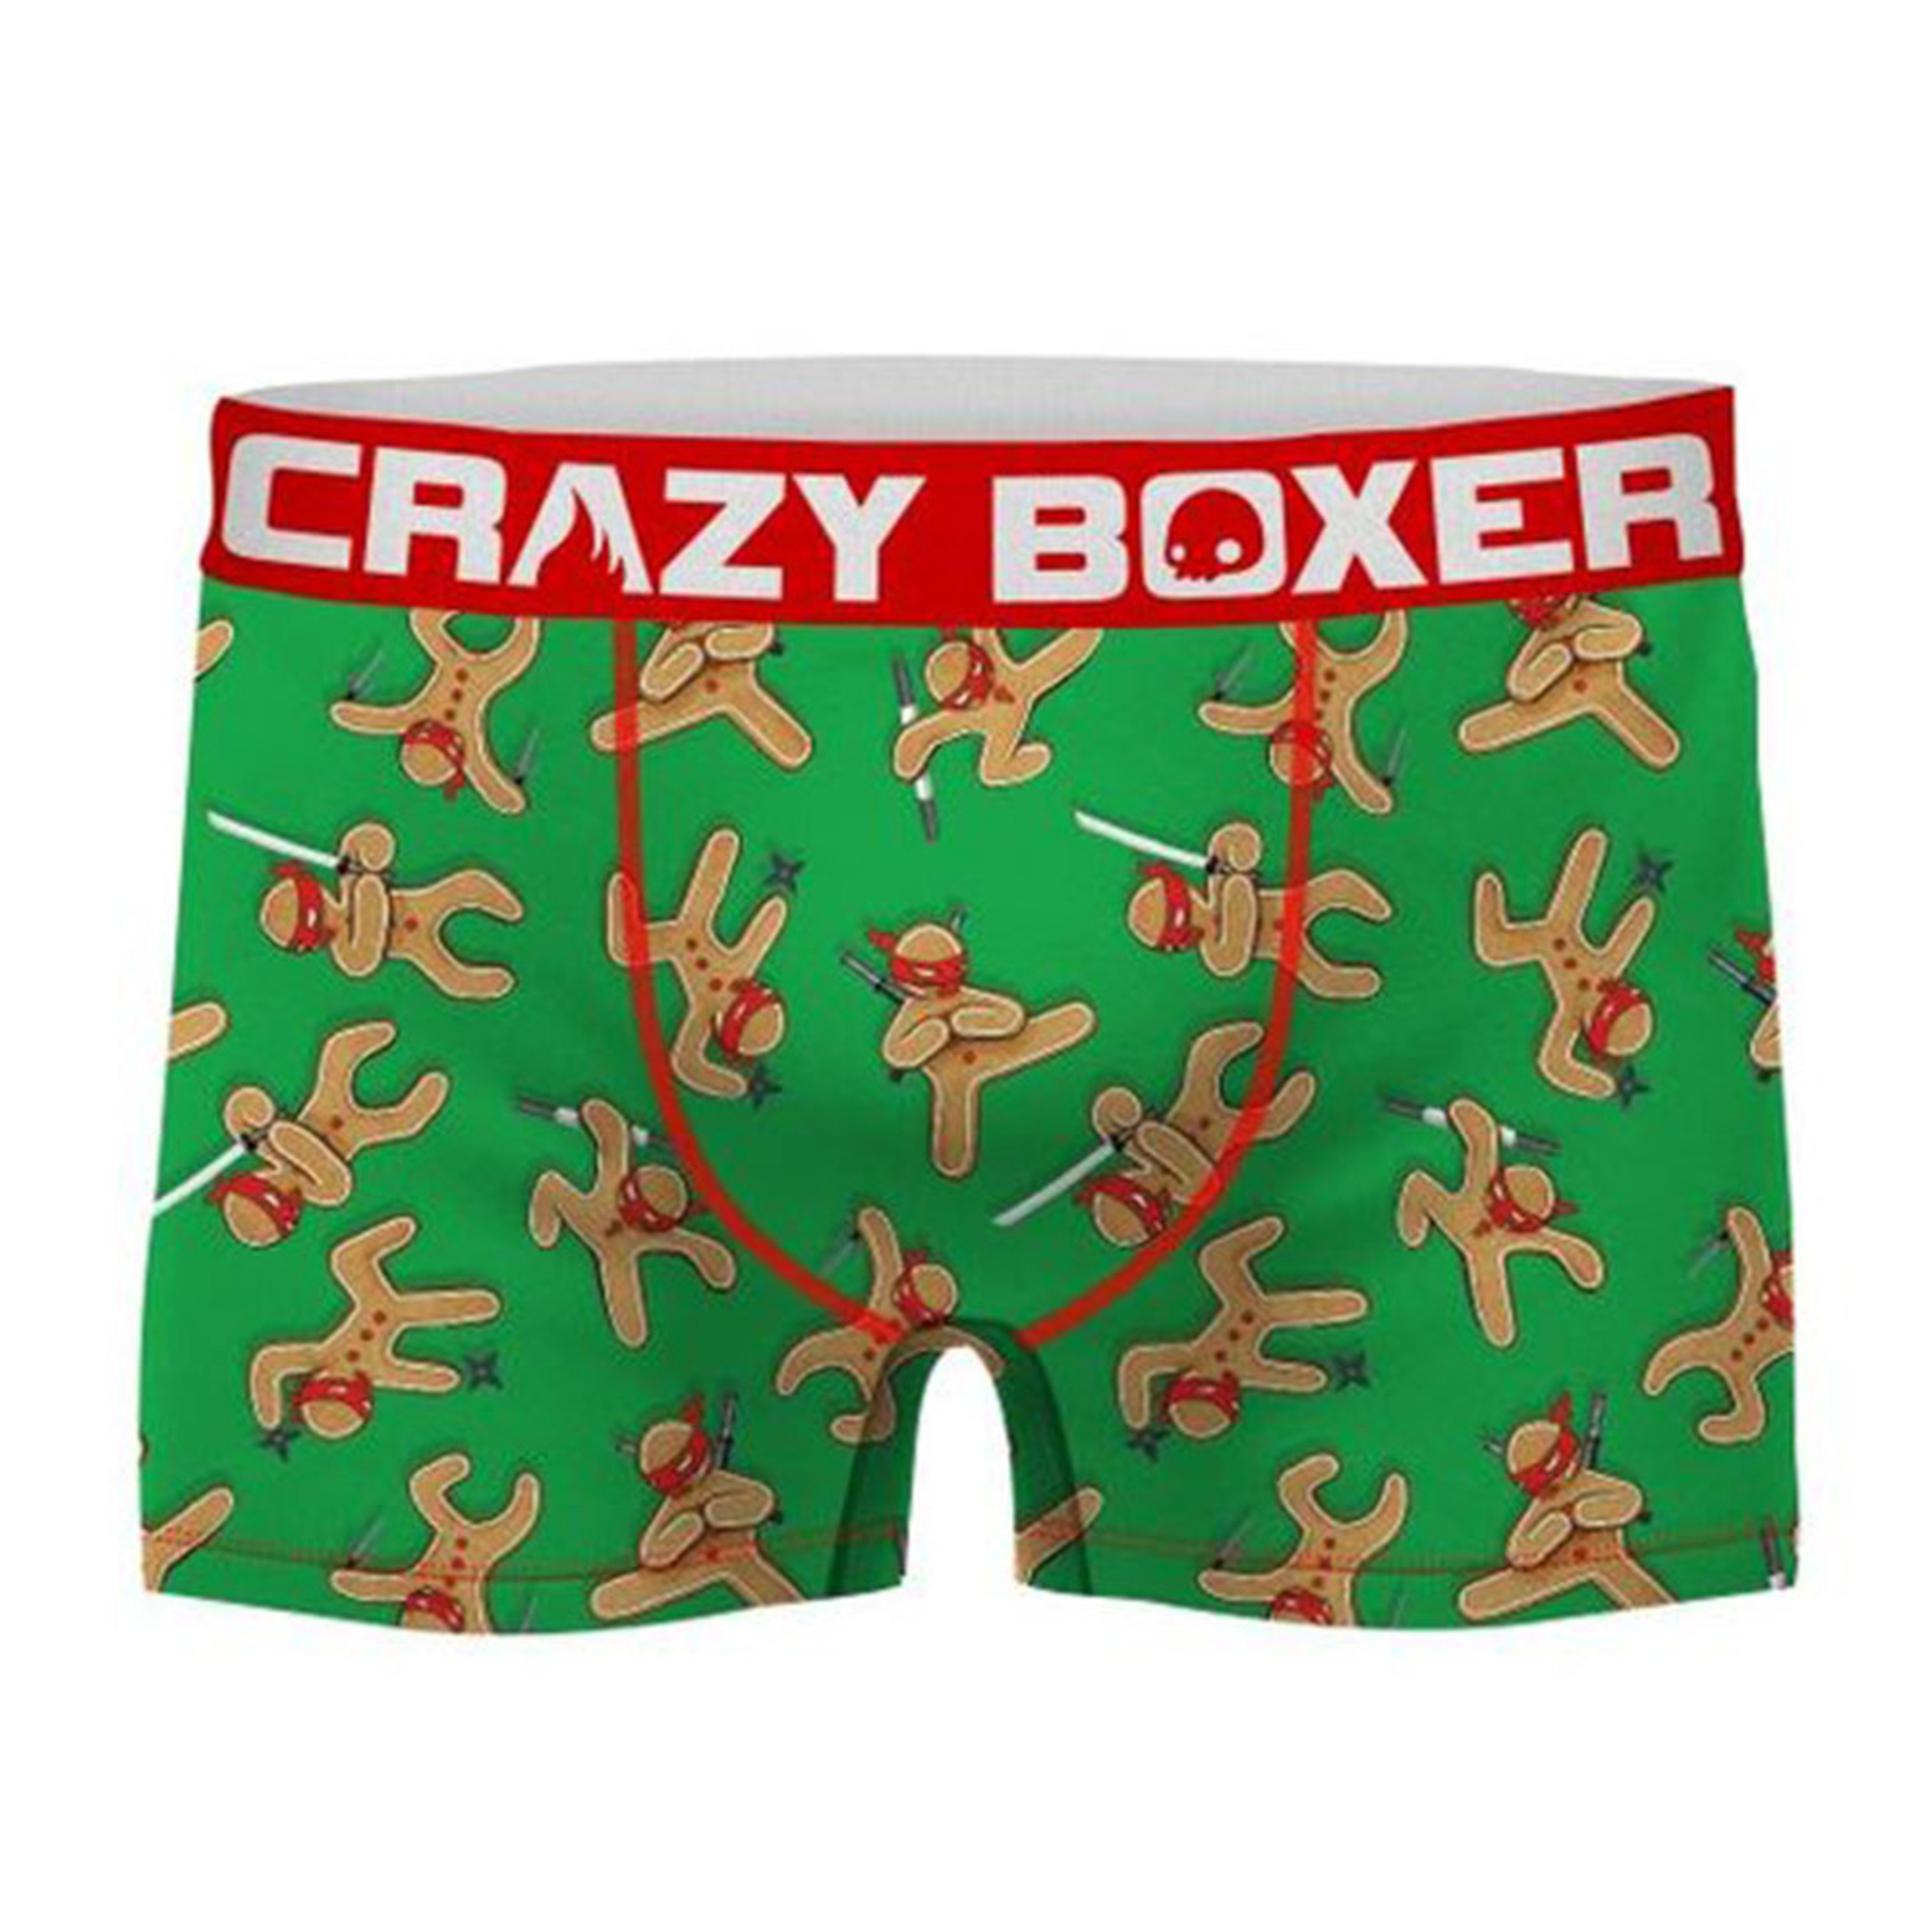 Calzoncillos Ninja Crazy Boxer Para Hombre - multicolor - 